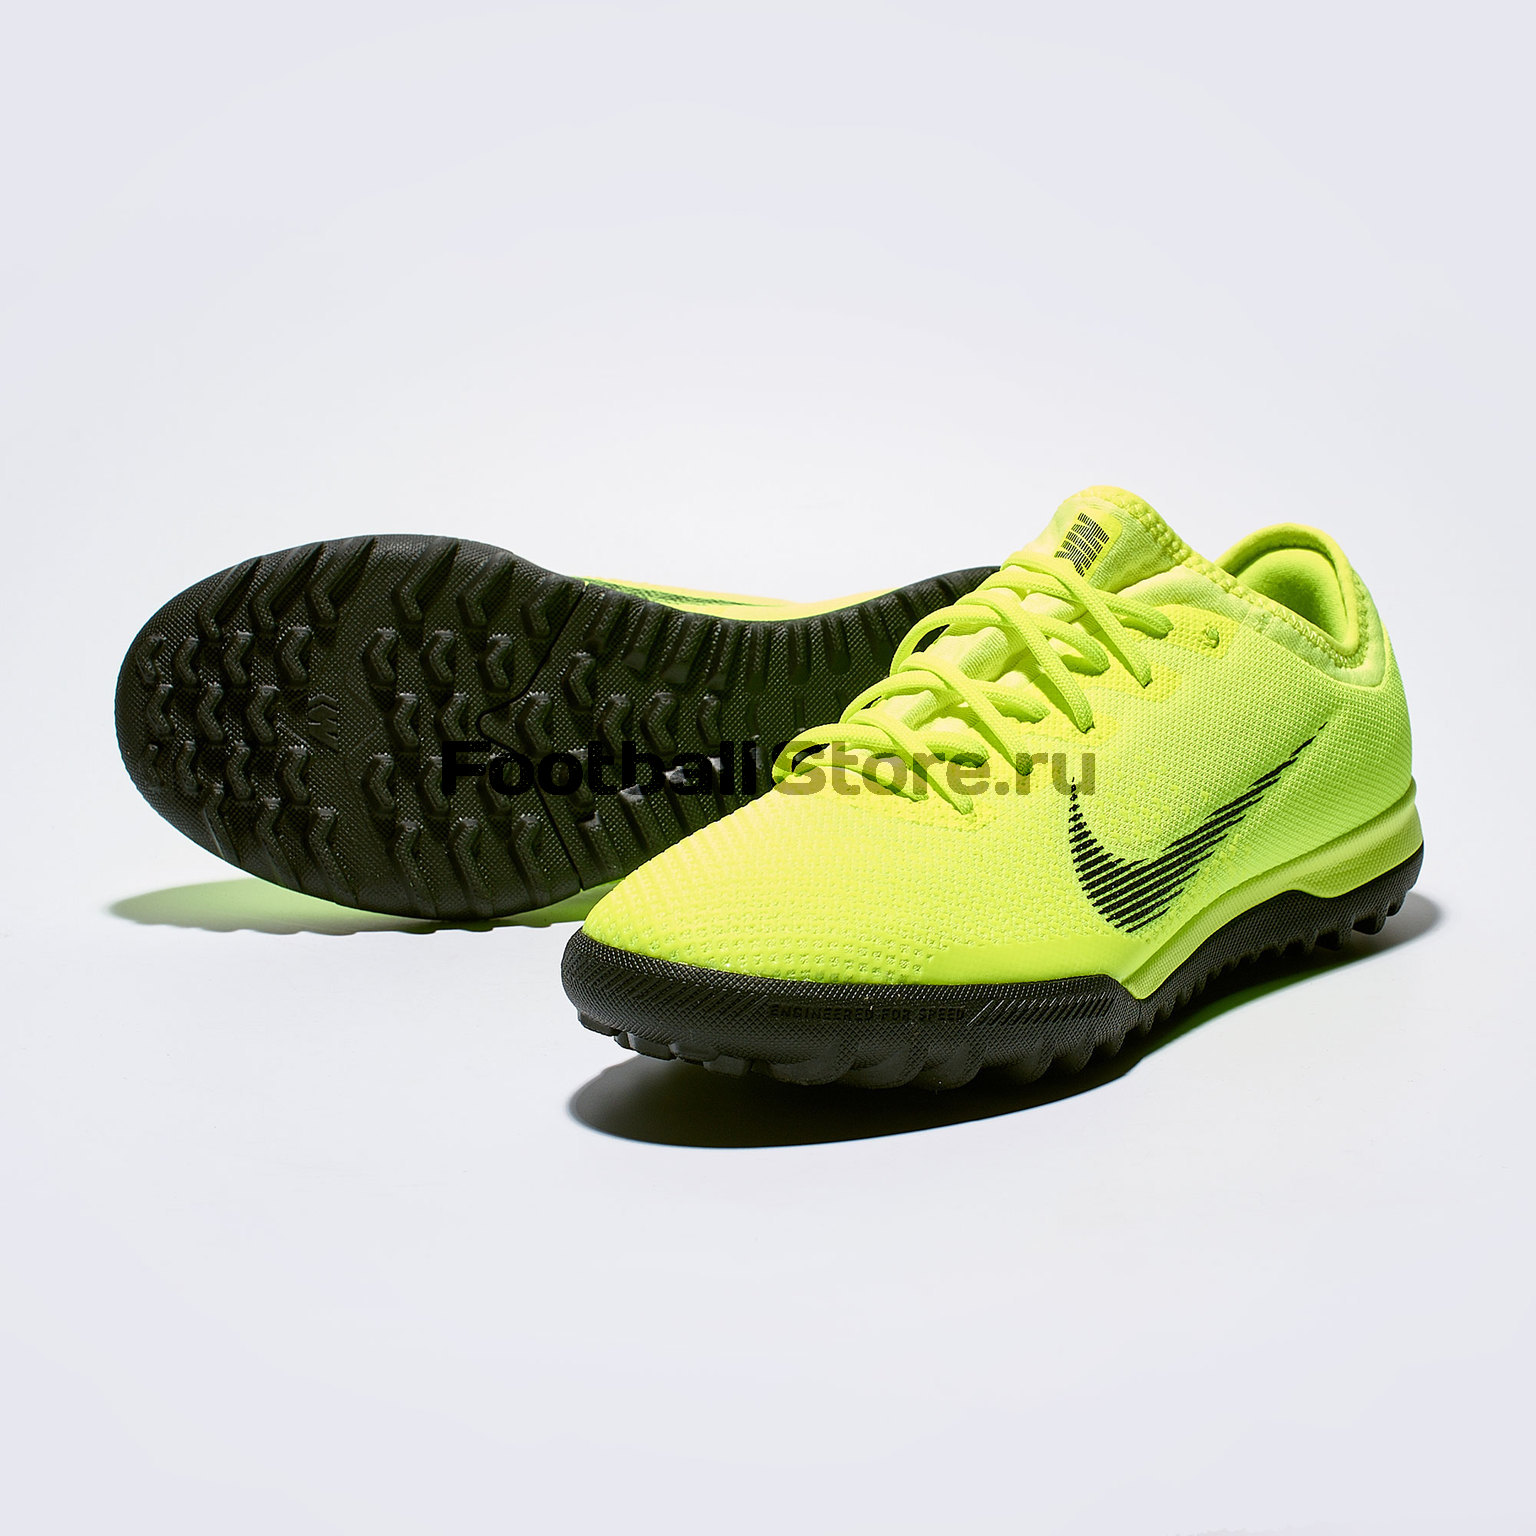 Nike Vapor 12 Pro TF AH7388-701 